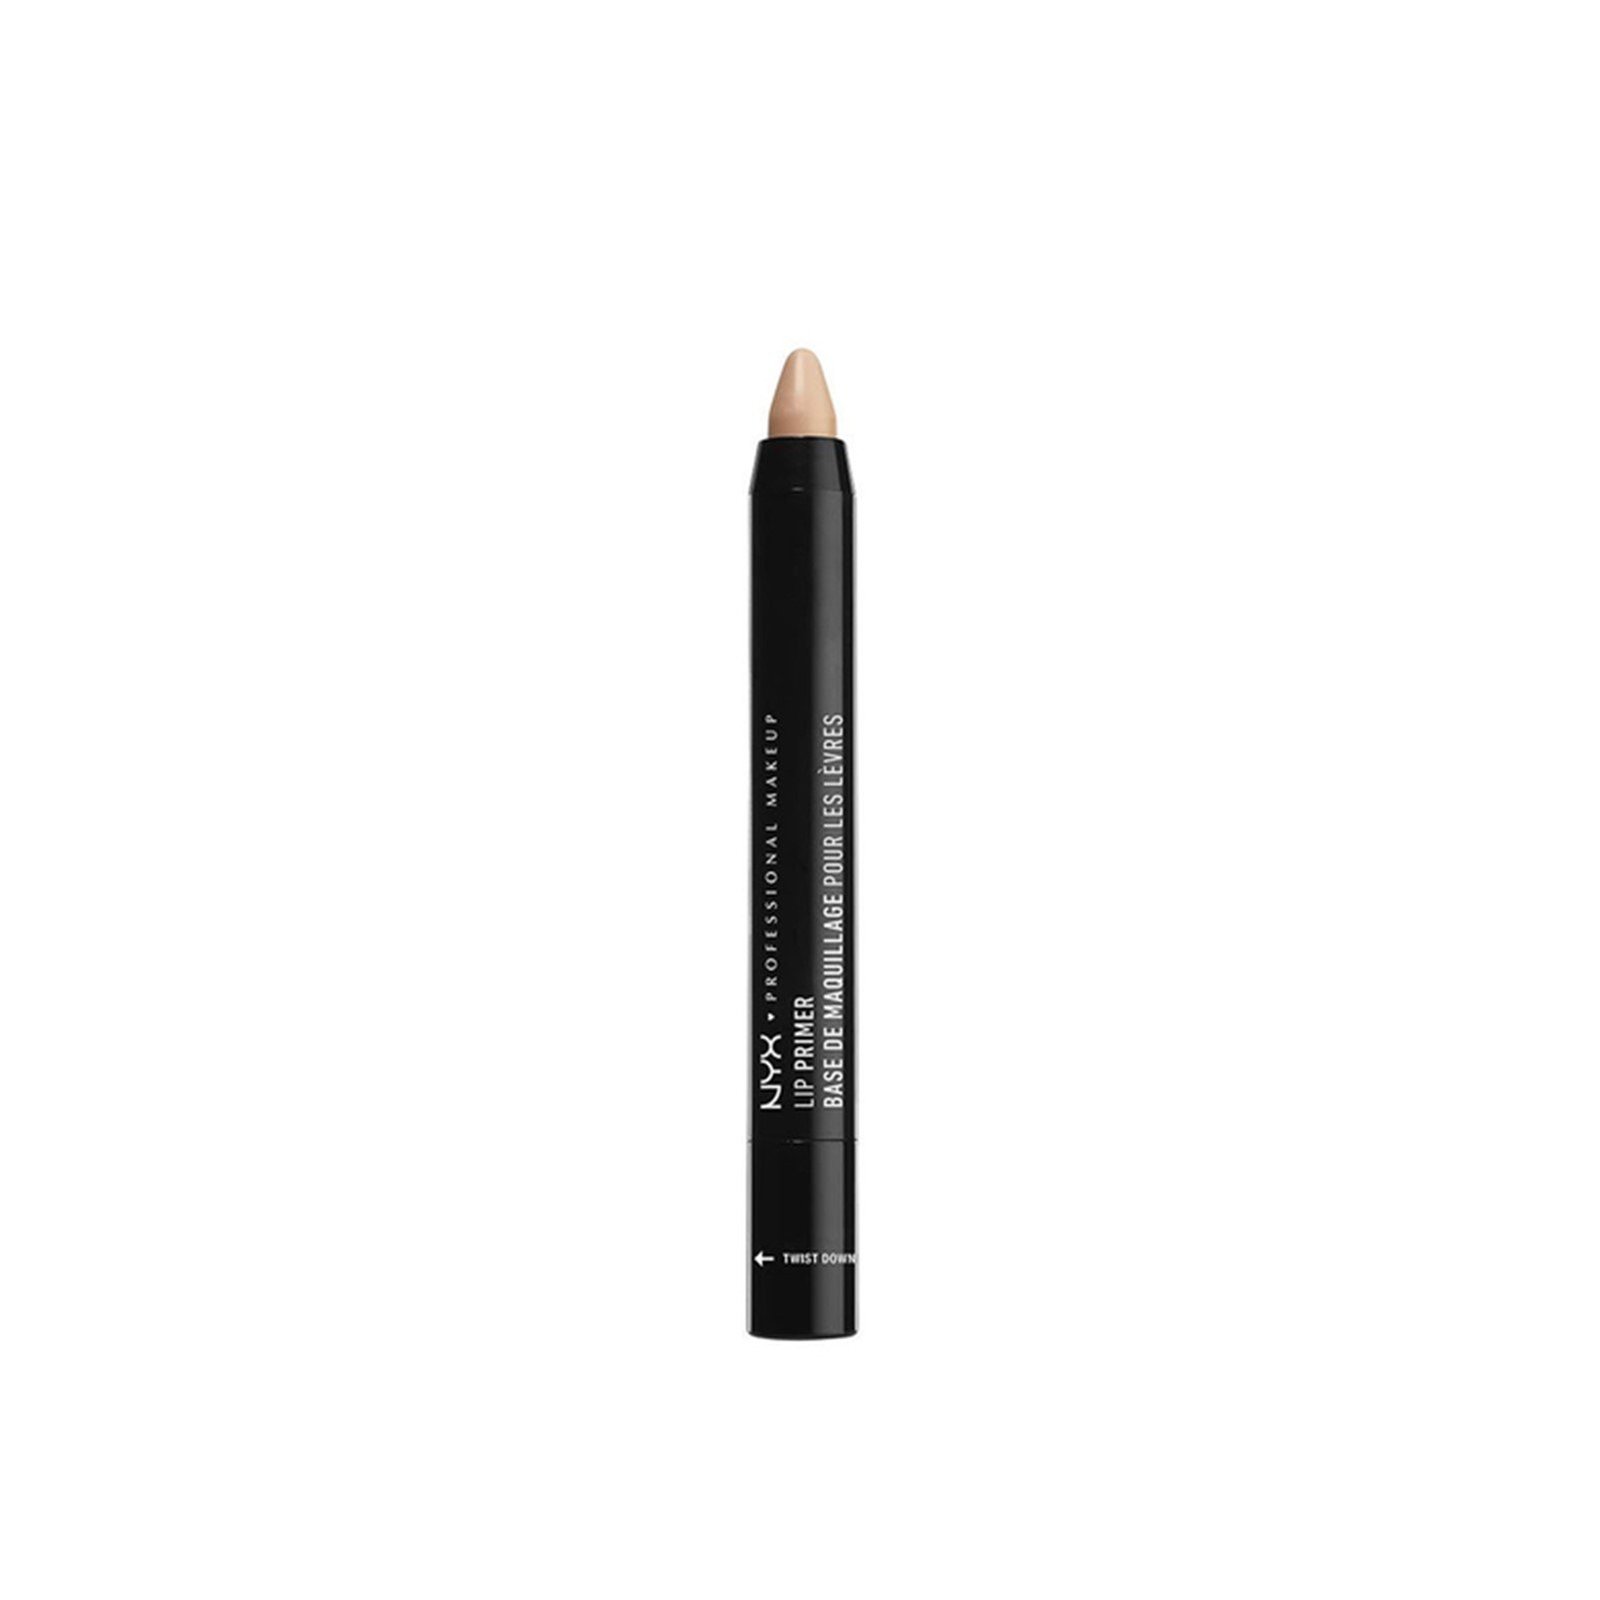 NYX Pro Makeup Lip Primer 02 Deep Nude 3g (0.10oz)